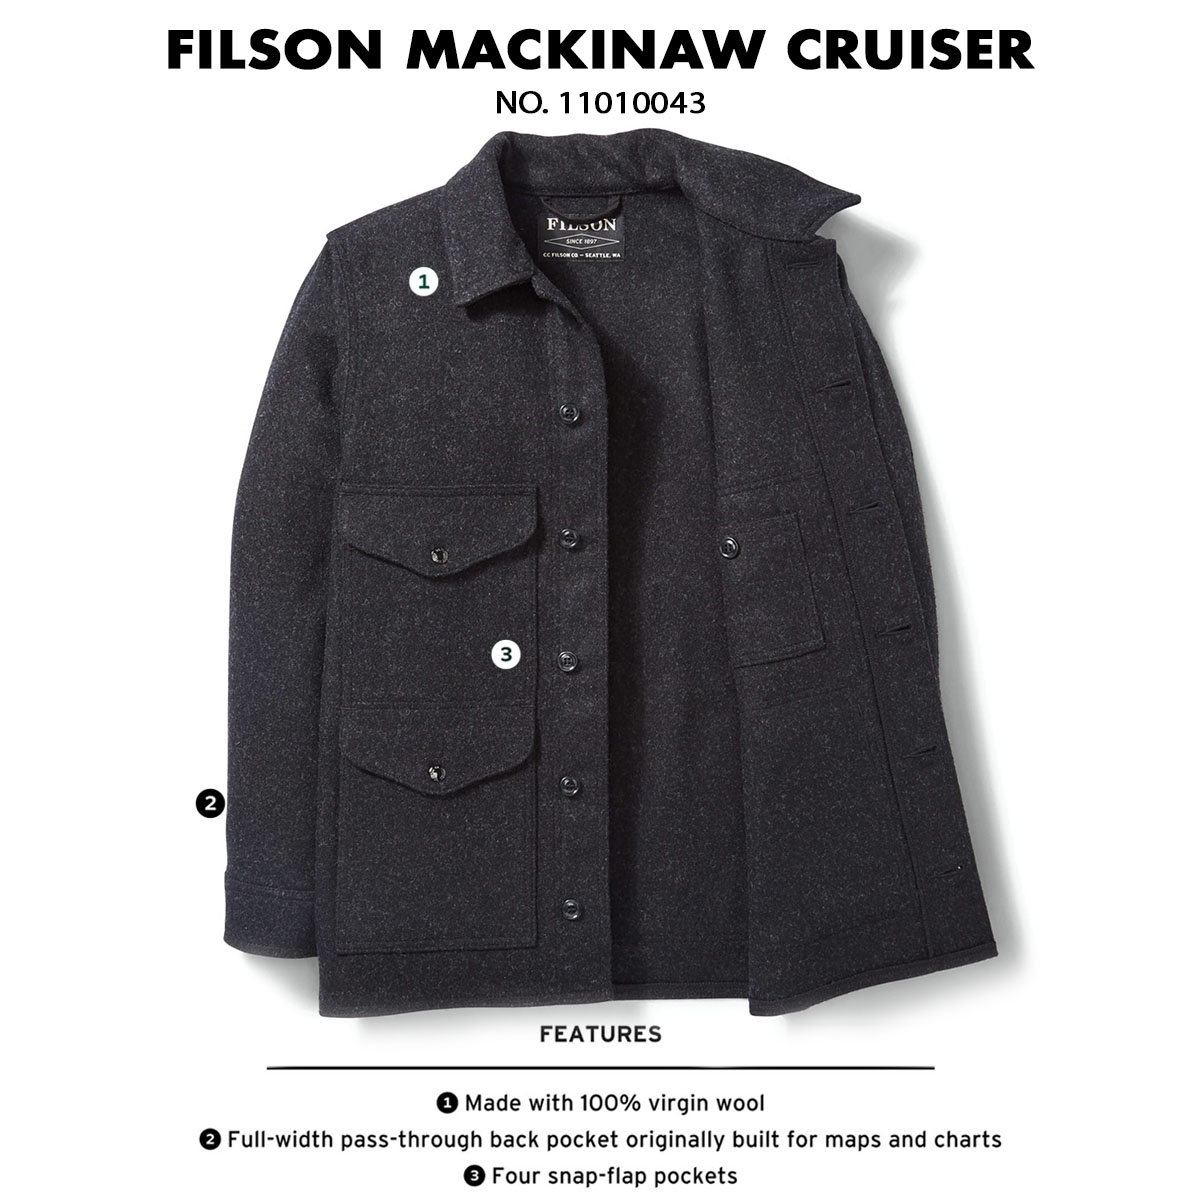 Filson Mackinaw Cruiser Wool Charcoal 11010043, features